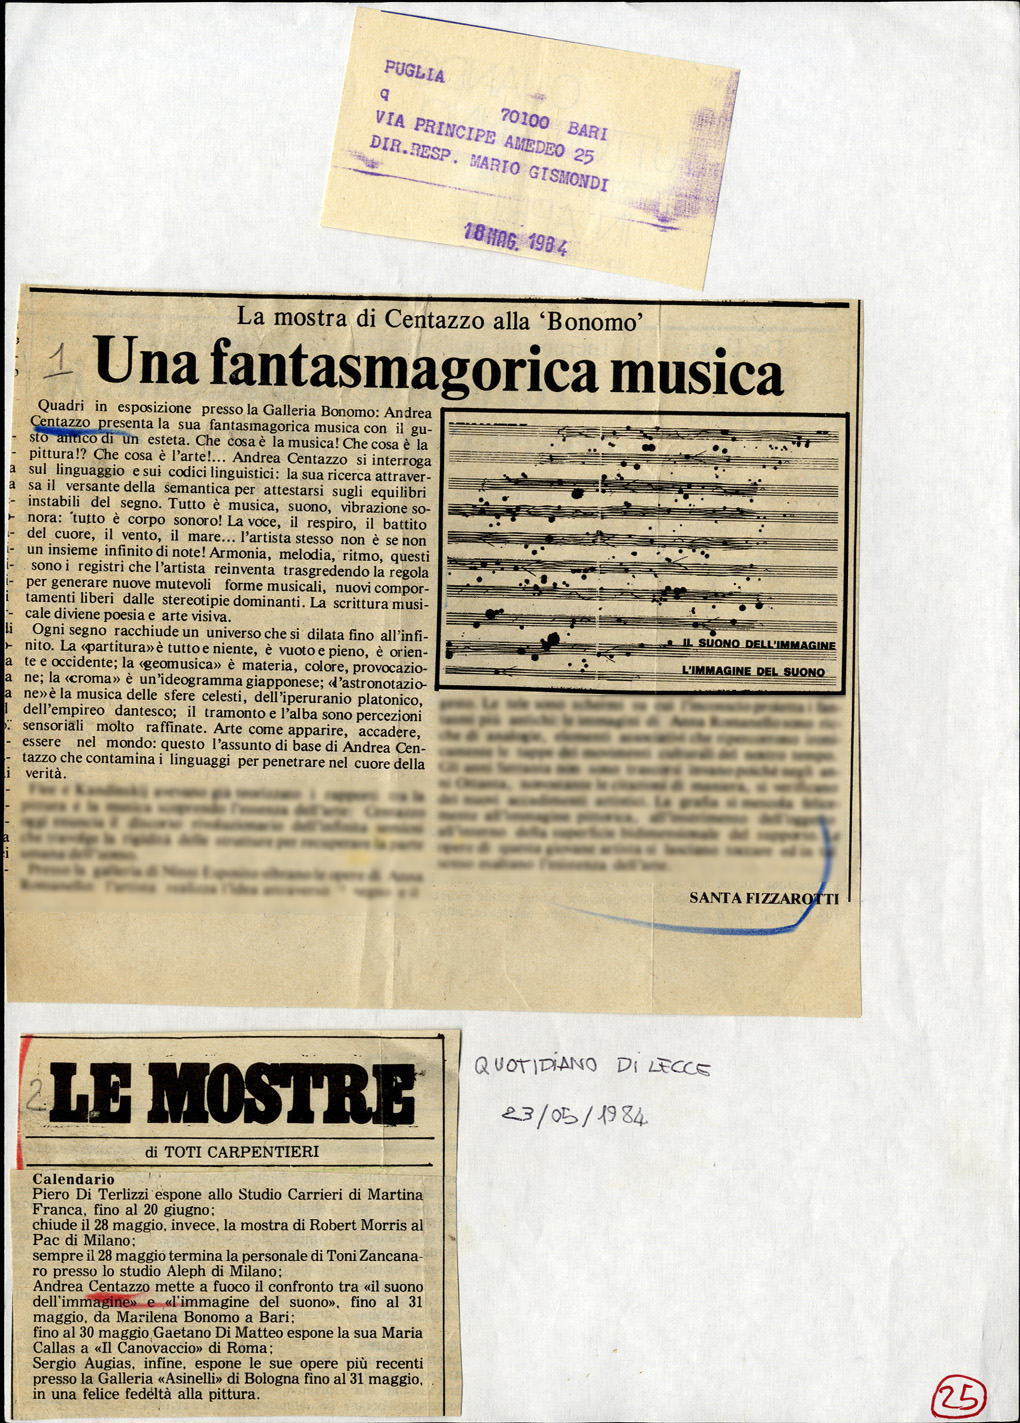 Una fantasmagorica musica, 1984